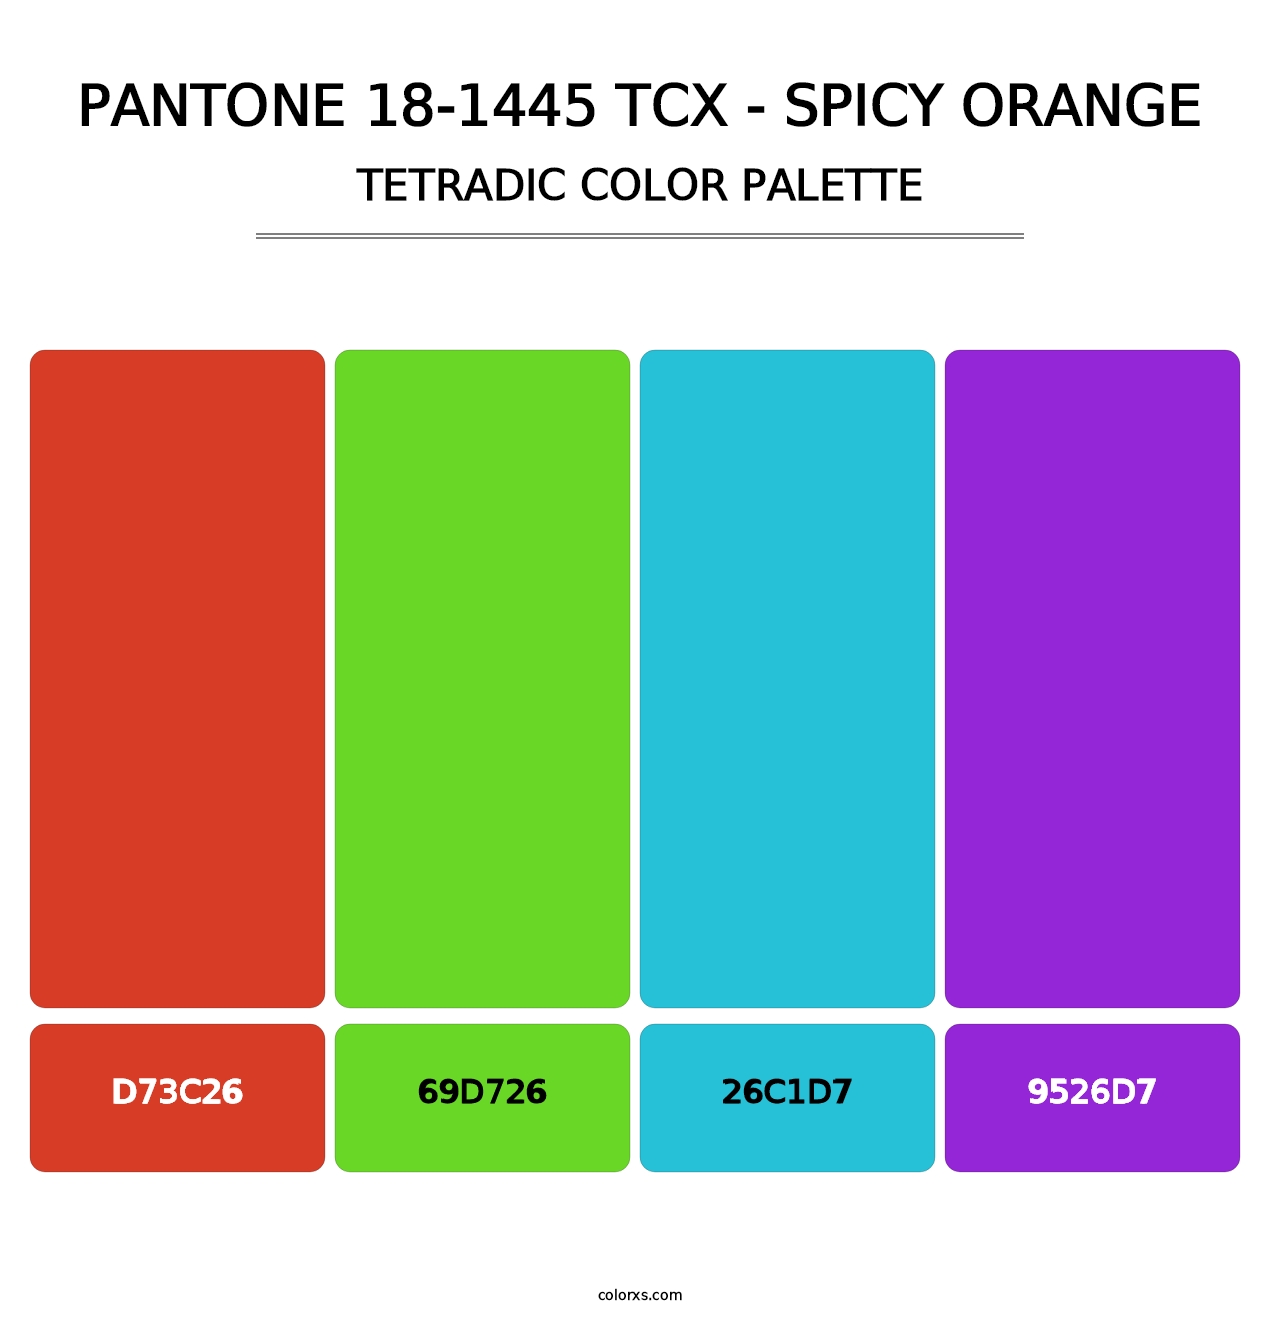 PANTONE 18-1445 TCX - Spicy Orange - Tetradic Color Palette